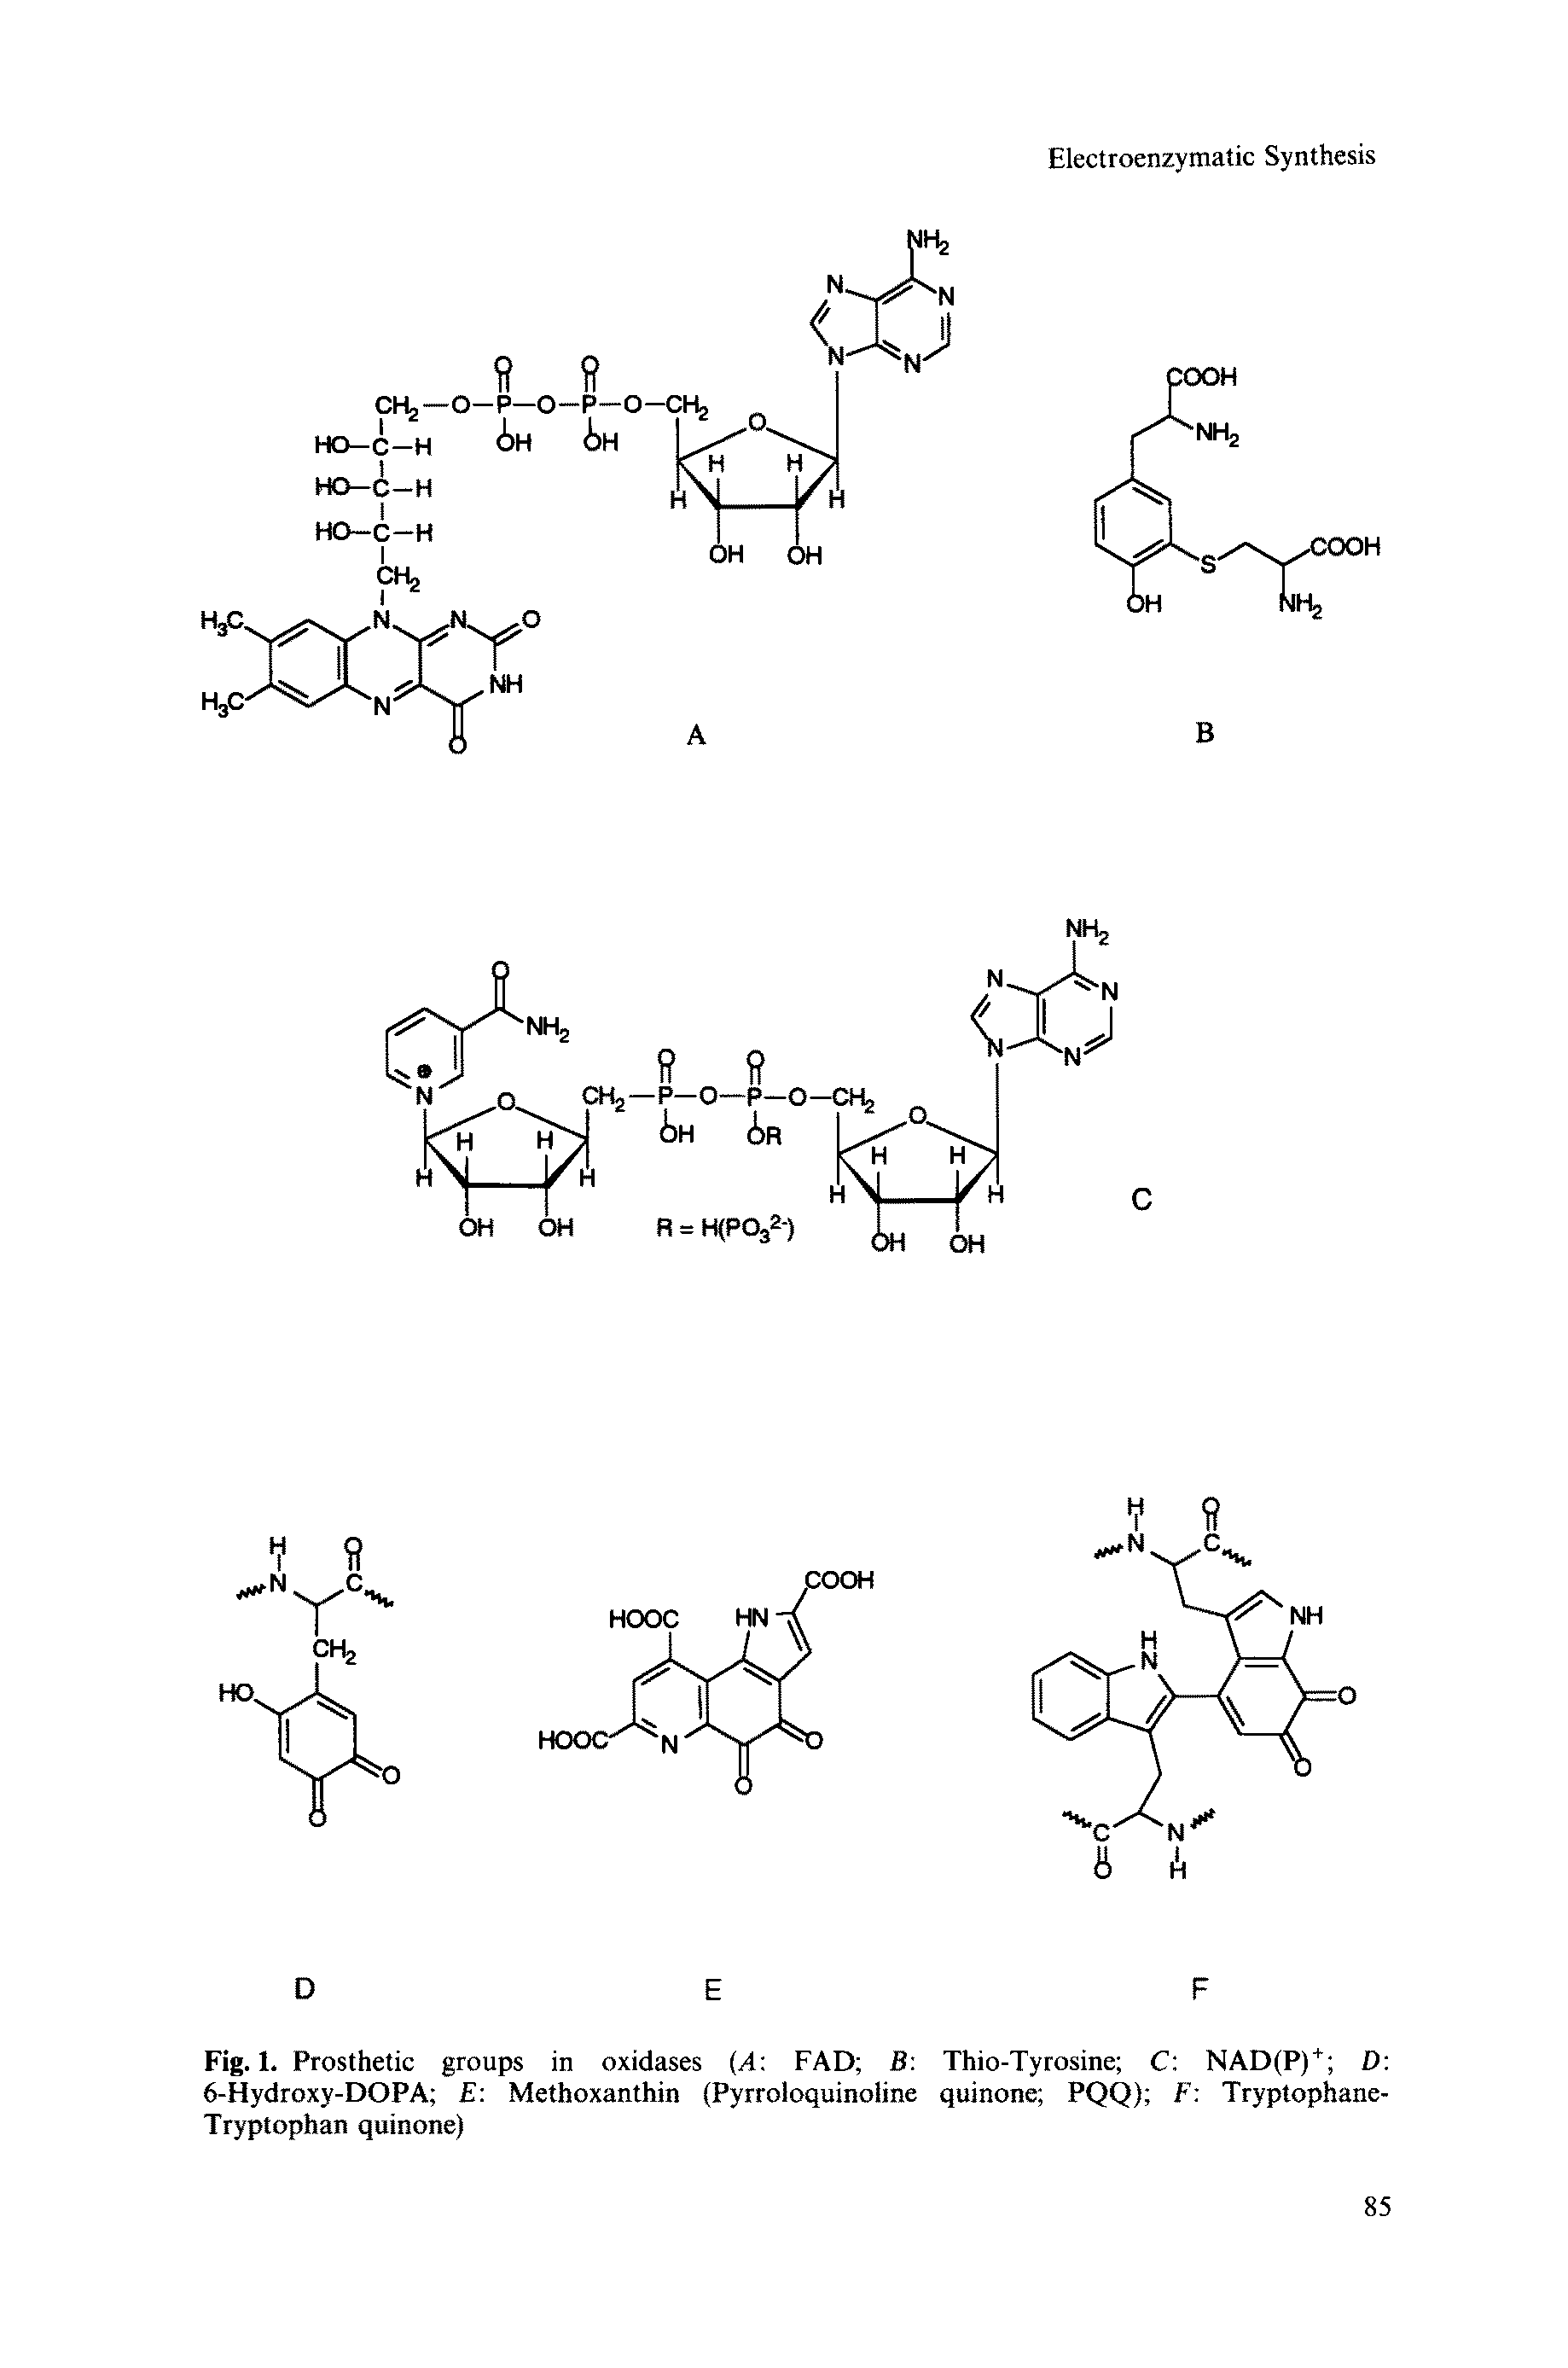 Fig. 1. Prosthetic groups in oxidases (A FAD B Thio-Tyrosine C NAD(P) + D 6-Hydroxy-DOPA E Methoxanthin (Pyrroloquinoline quinone PQQ) F Tryptophane-Tryptophan quinone)...